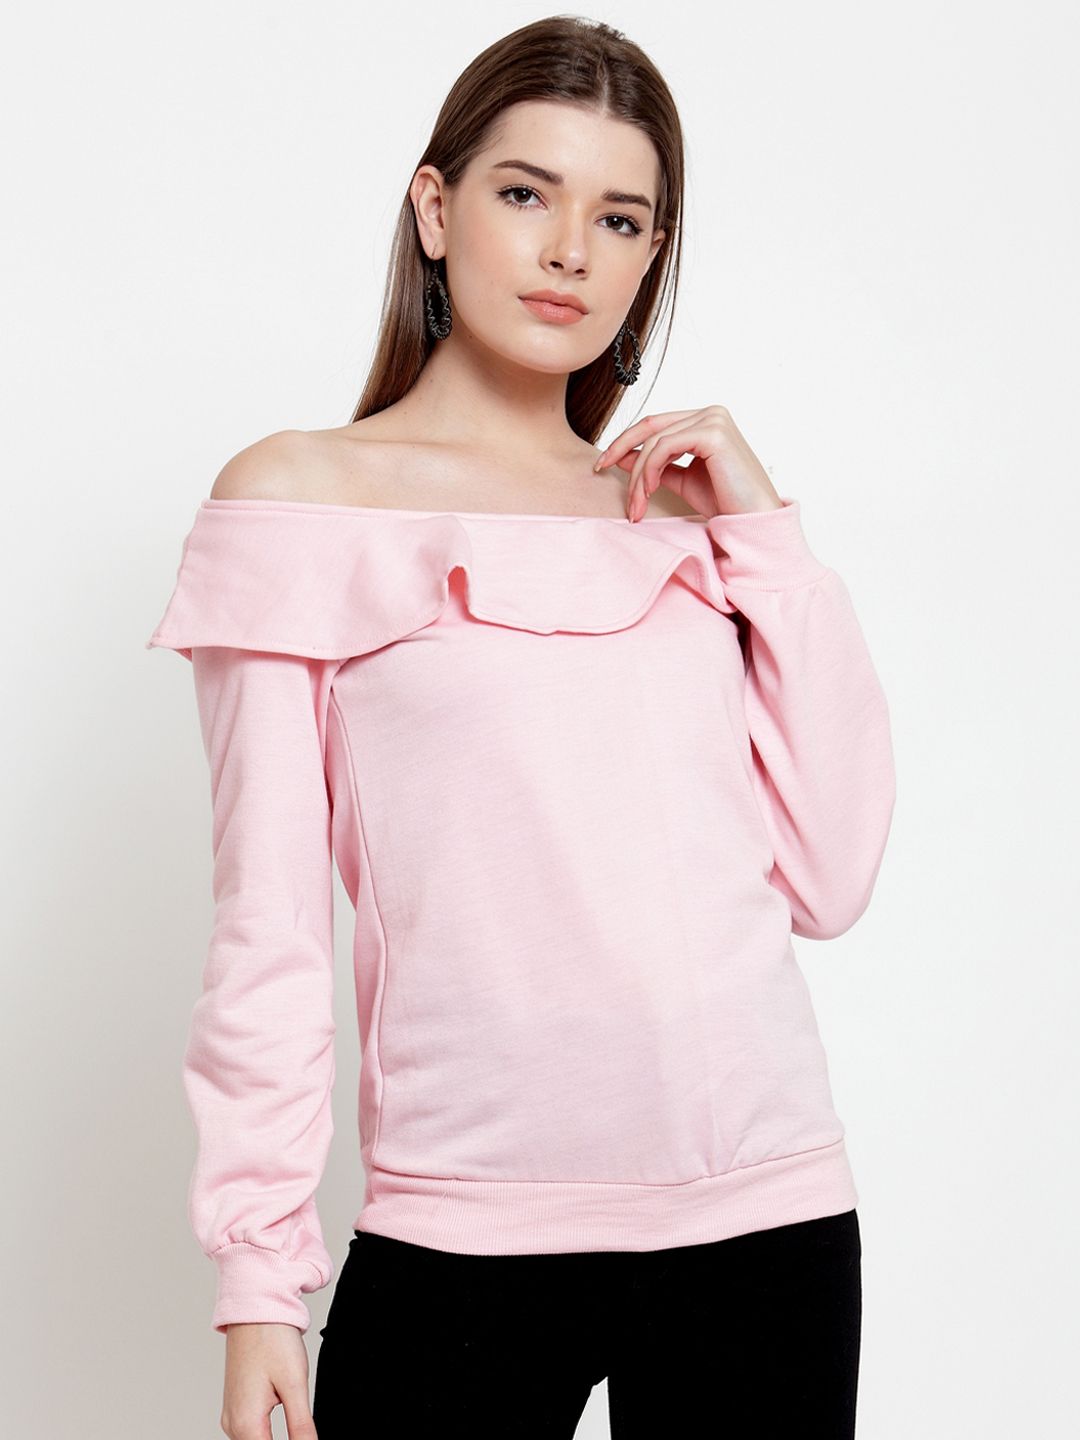 Belle Fille Women Pink Solid Sweatshirt Price in India